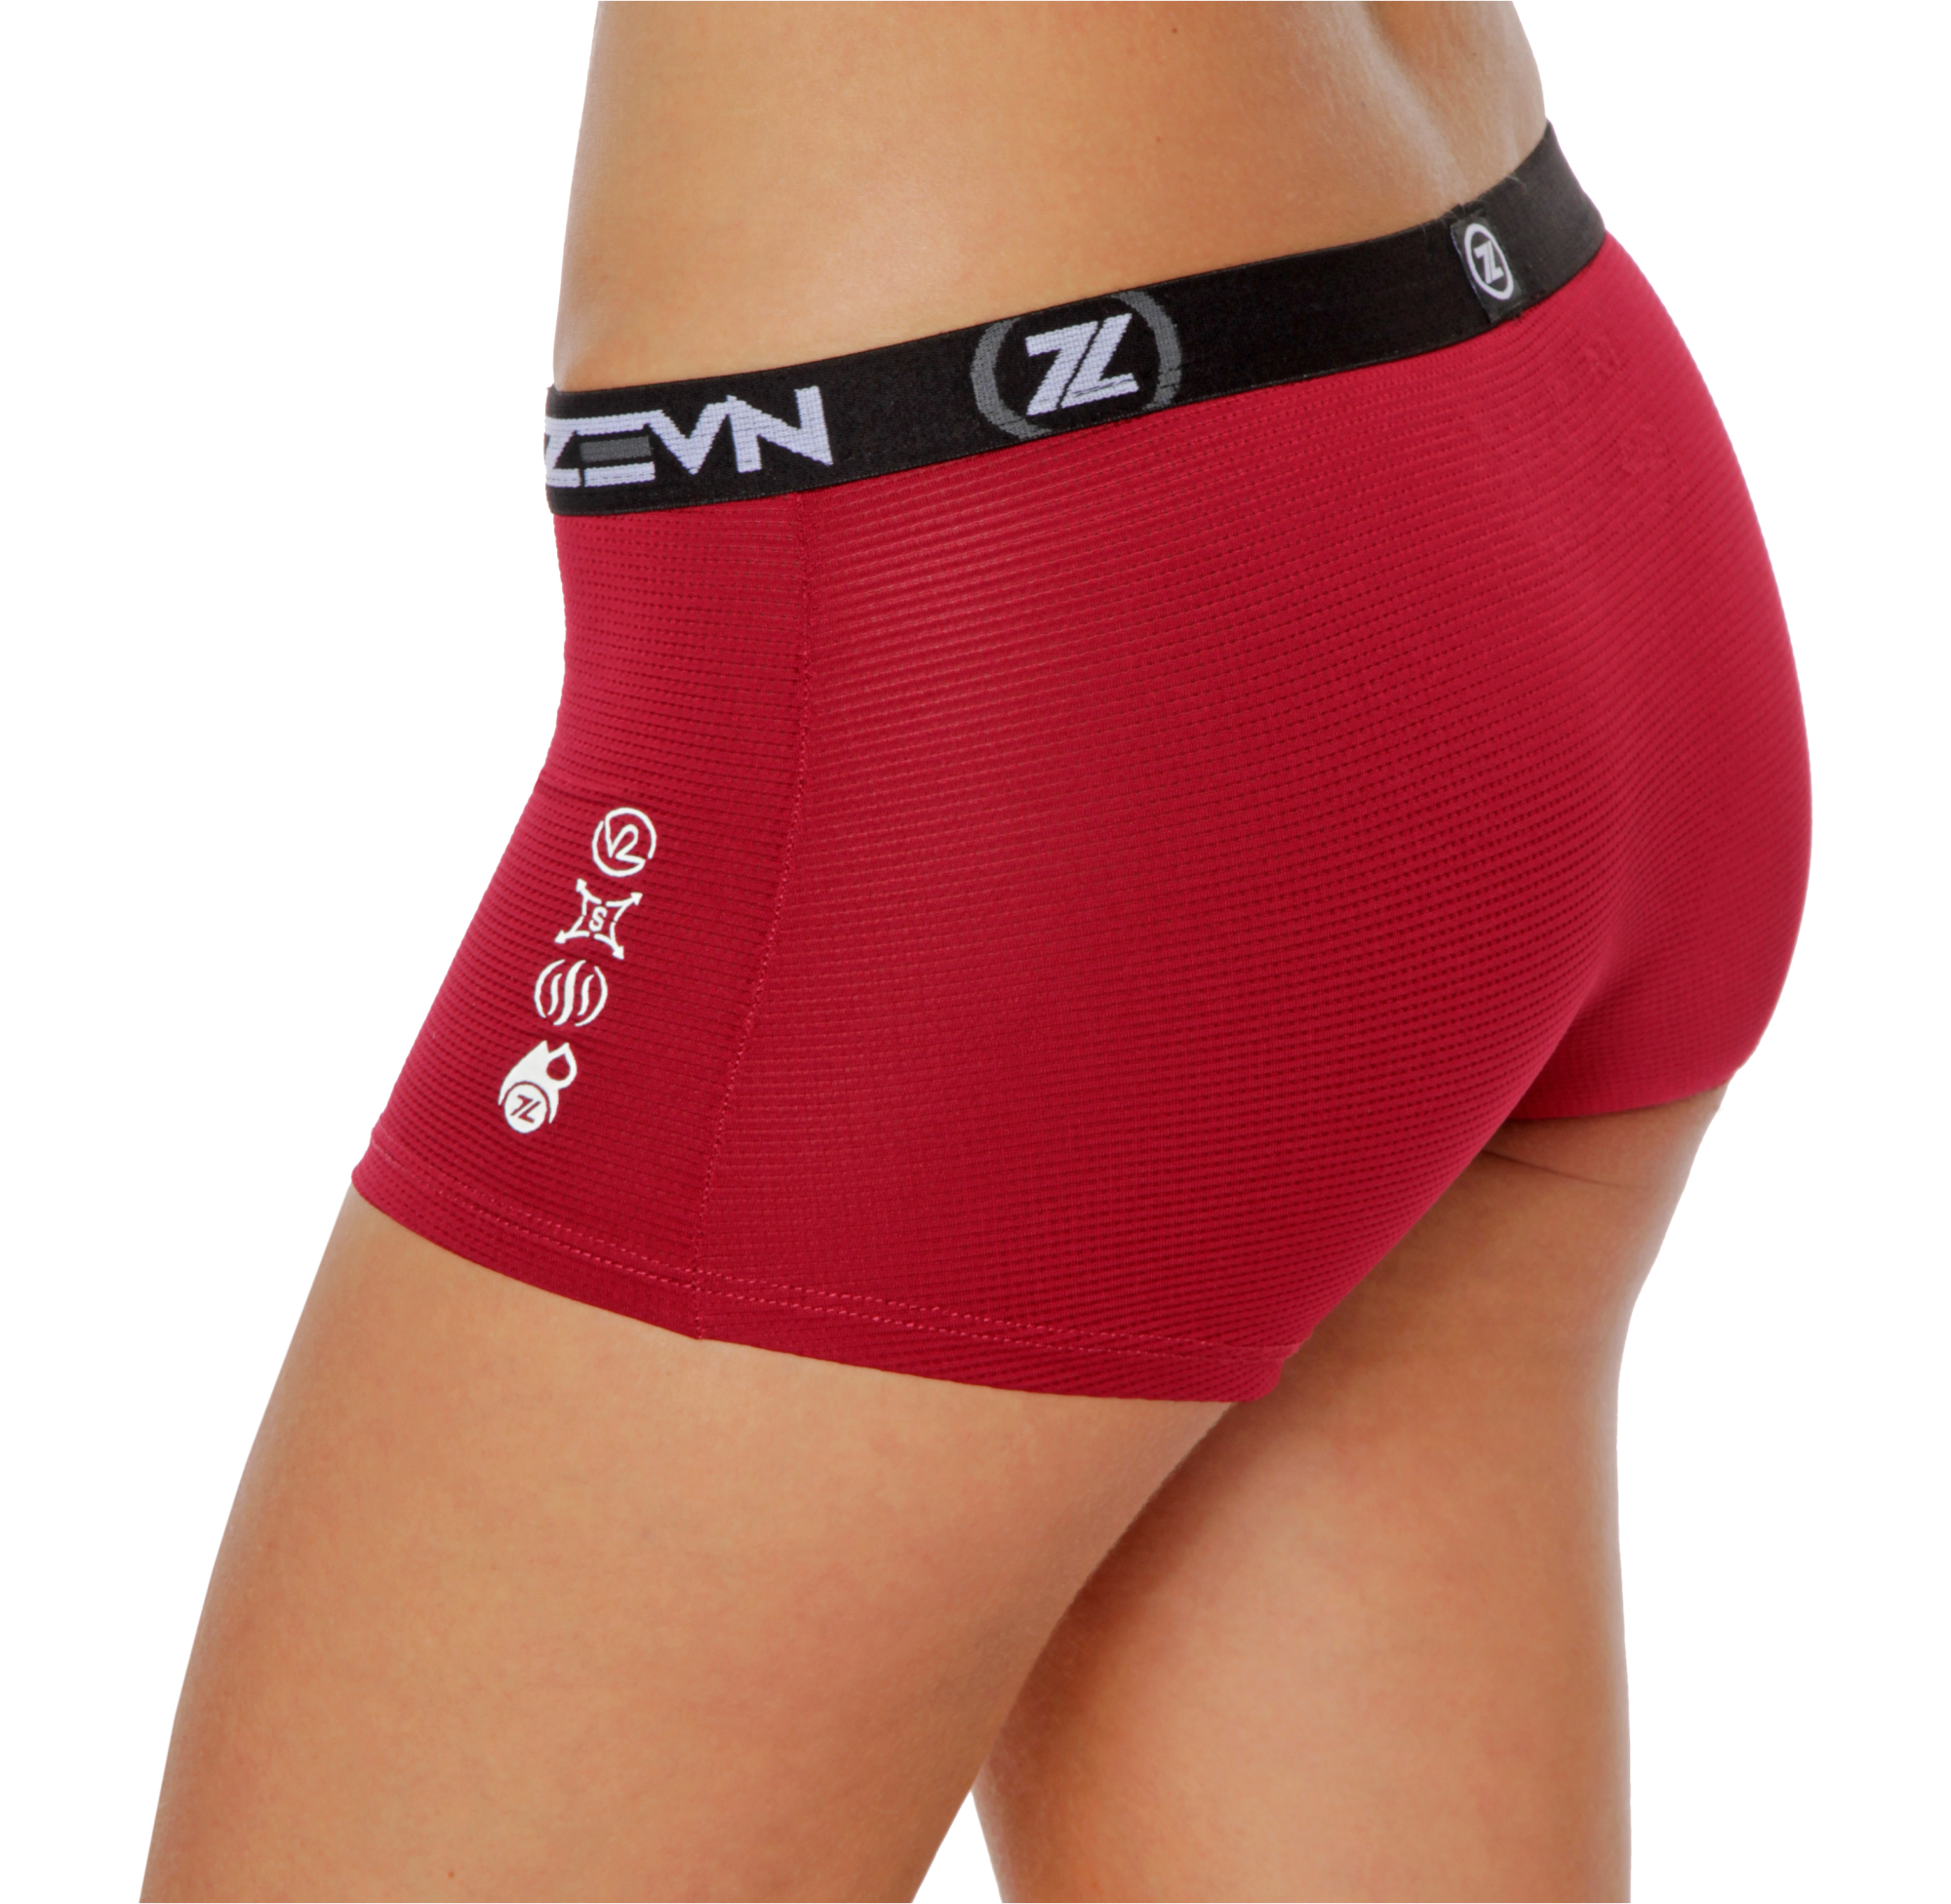 Women's Sports Underwear